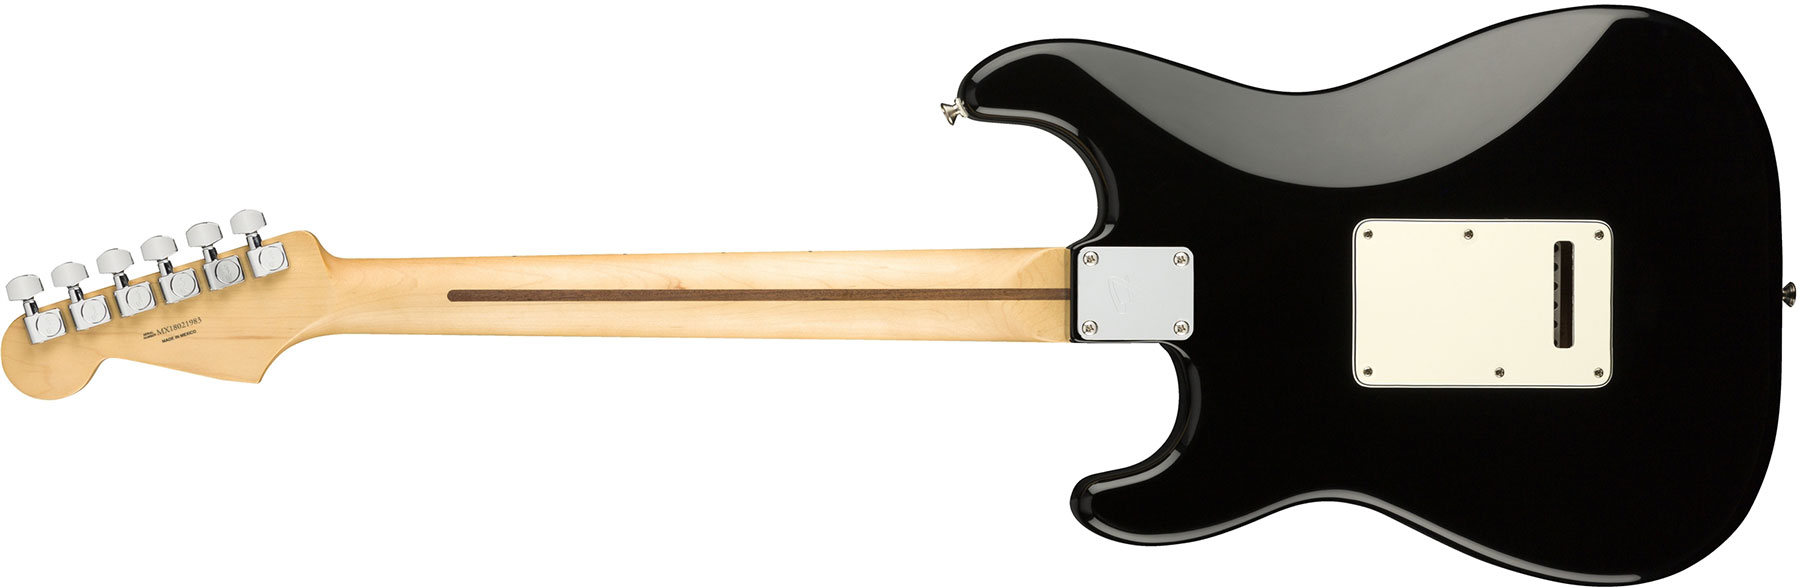 Fender Strat Player Mex Hss Mn - Black - Guitarra eléctrica con forma de str. - Variation 1